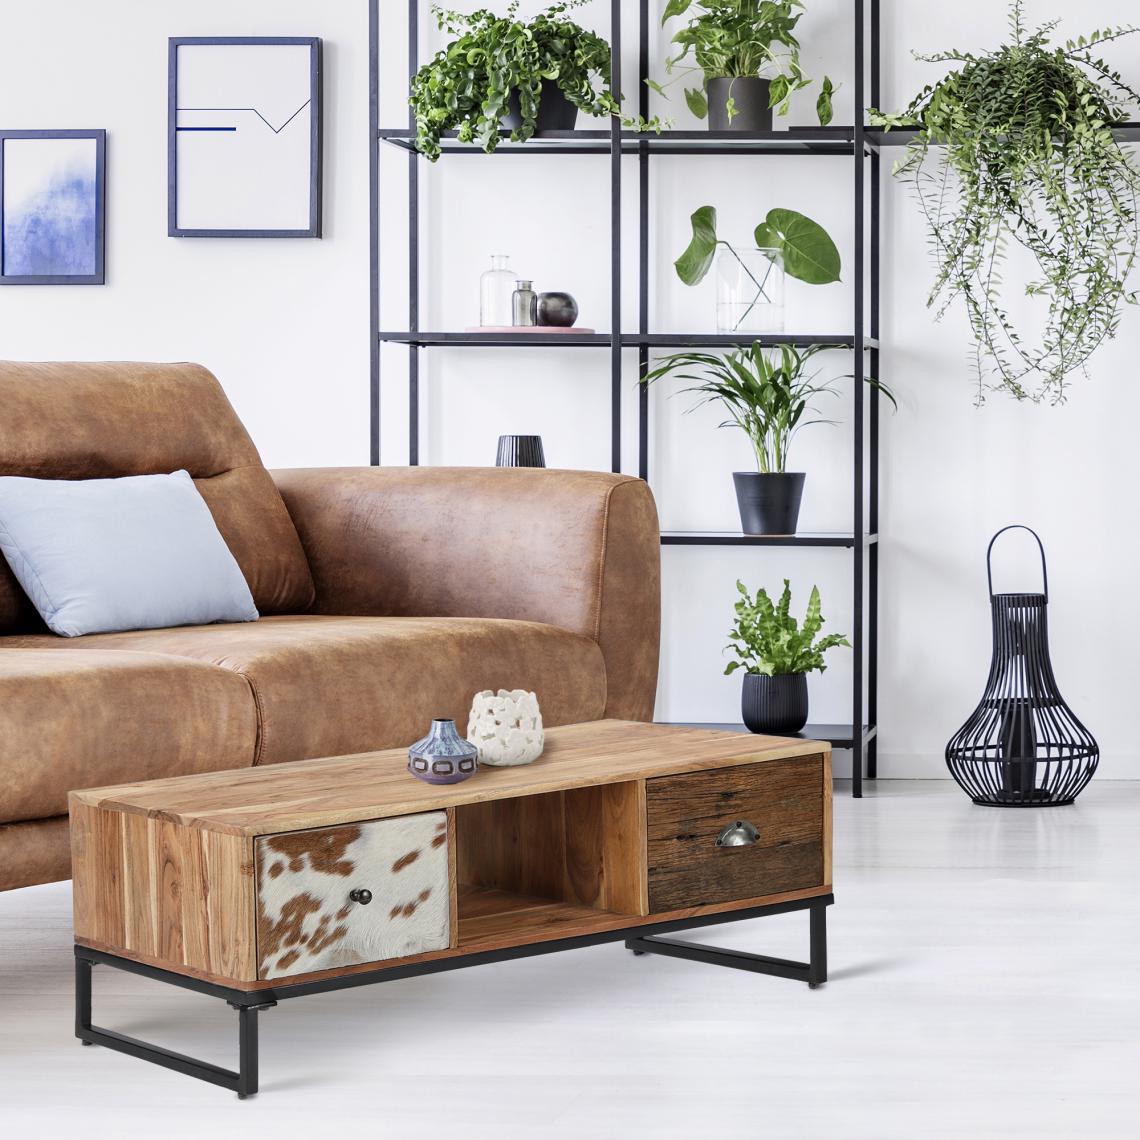 Womo-design - Table basse console meuble TV commode salon en bois massif 110 cm WOMO-DESIGN® - Tables basses